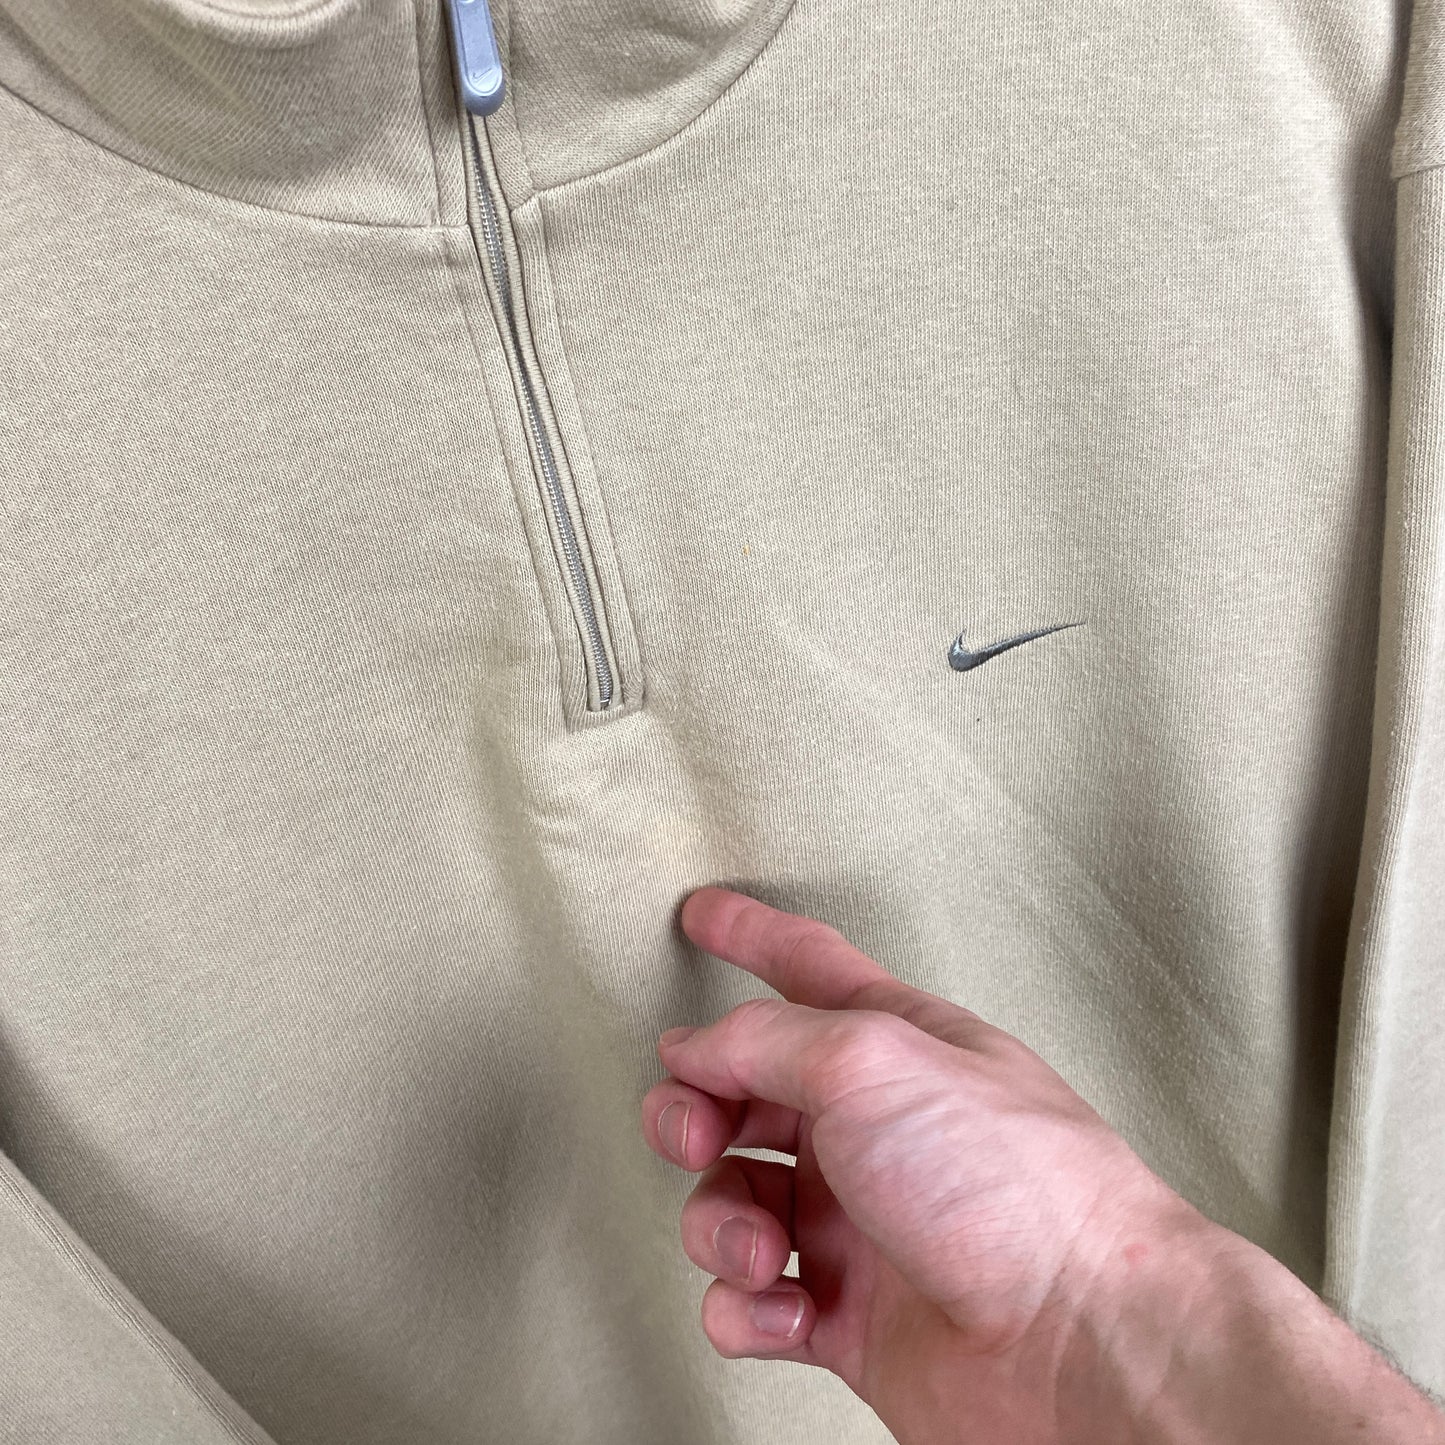 90s Nike 1/4 Zip Sweatshirt Brown XL